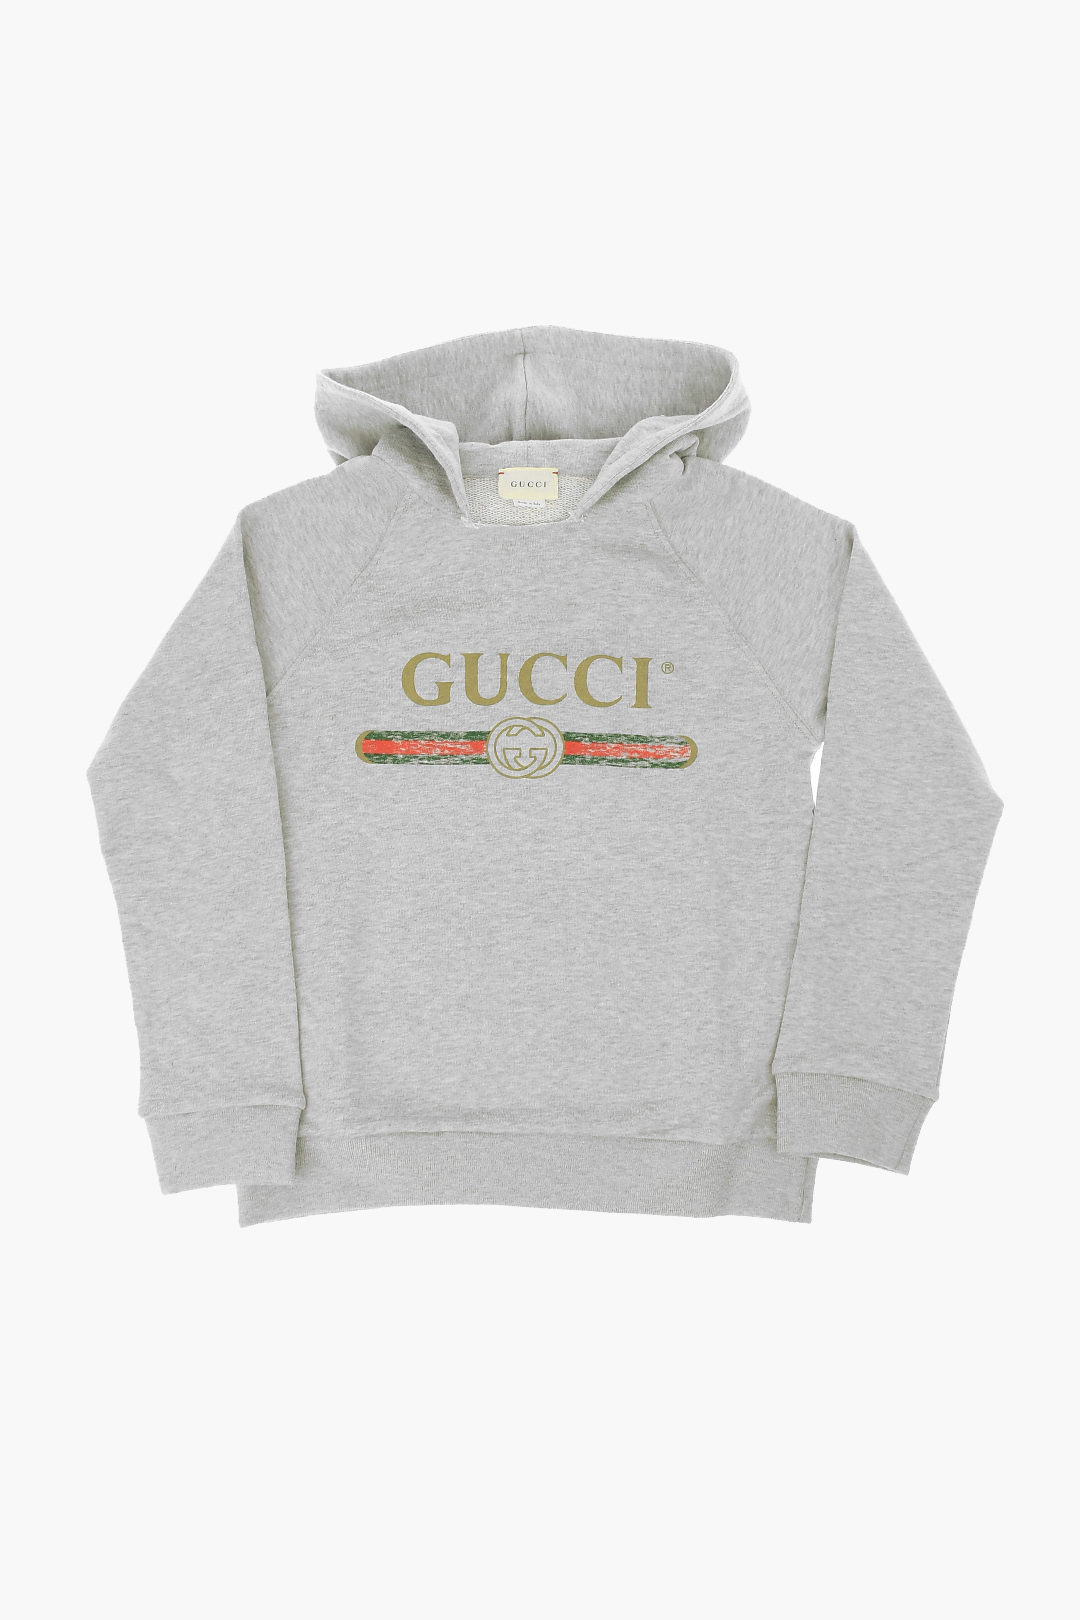 Gucci Kids Printed Hoodie Sweatshirt unisex boys girls - Glamood Outlet